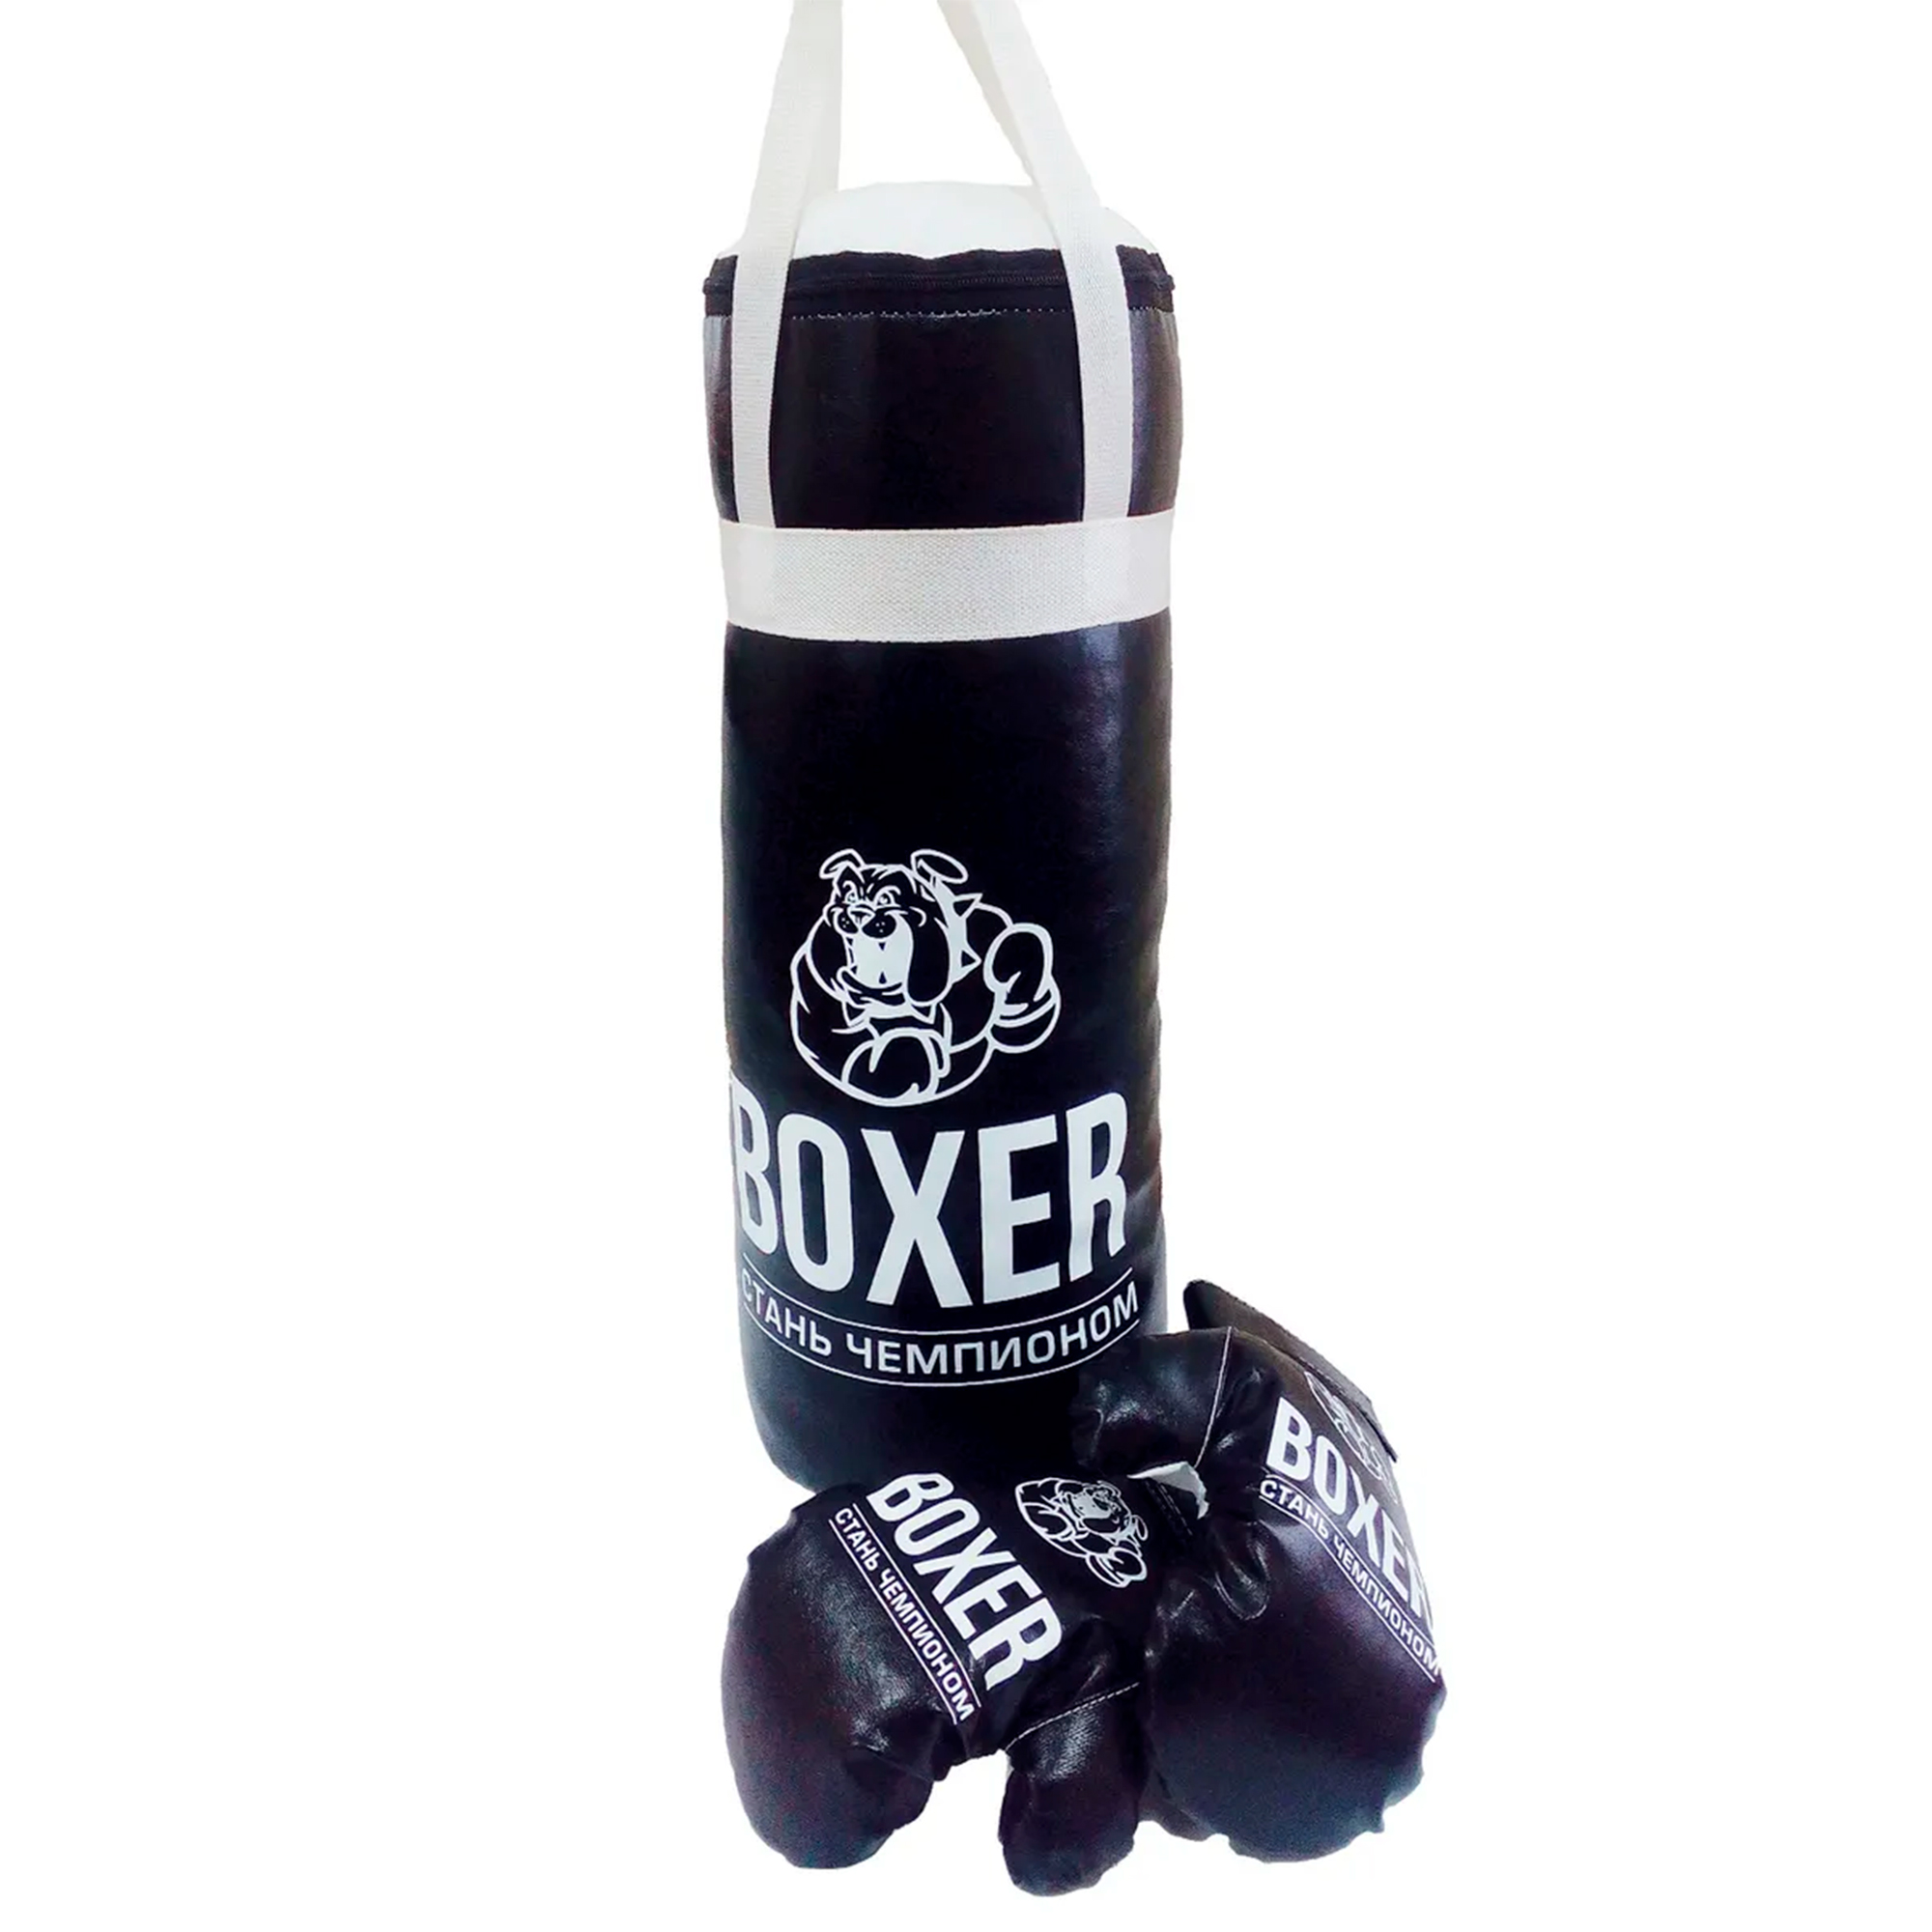 Набор для бокса Мега Тойс перчатки + груша 50 см - фото 1